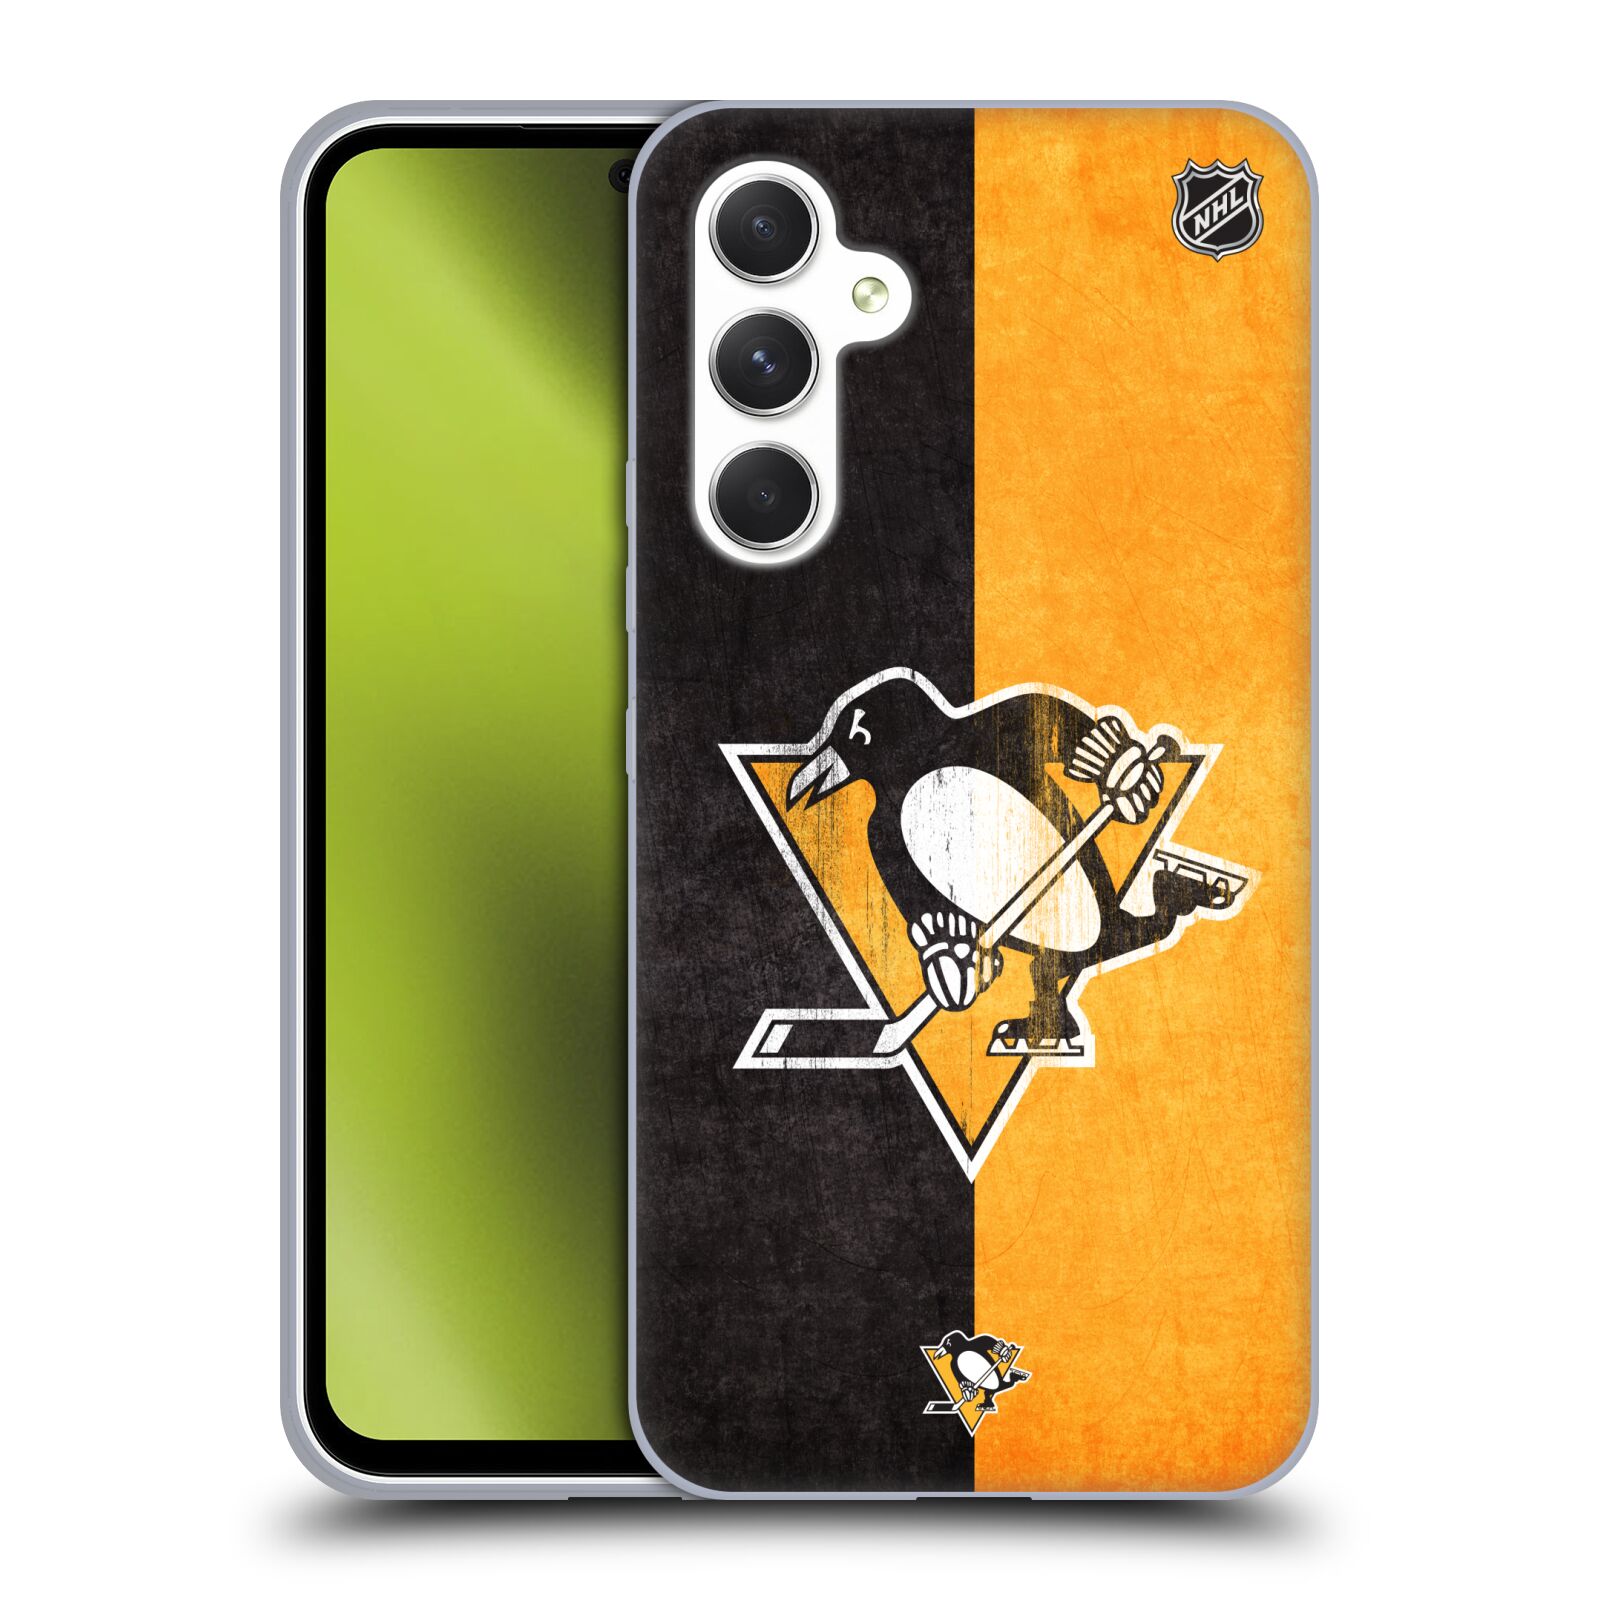 Silikonové pouzdro na mobil Samsung Galaxy A54 5G - NHL - Půlené logo Pittsburgh Penguins (Silikonový kryt, obal, pouzdro na mobilní telefon Samsung Galaxy A54 5G s licencovaným motivem NHL - Půlené logo Pittsburgh Penguins)